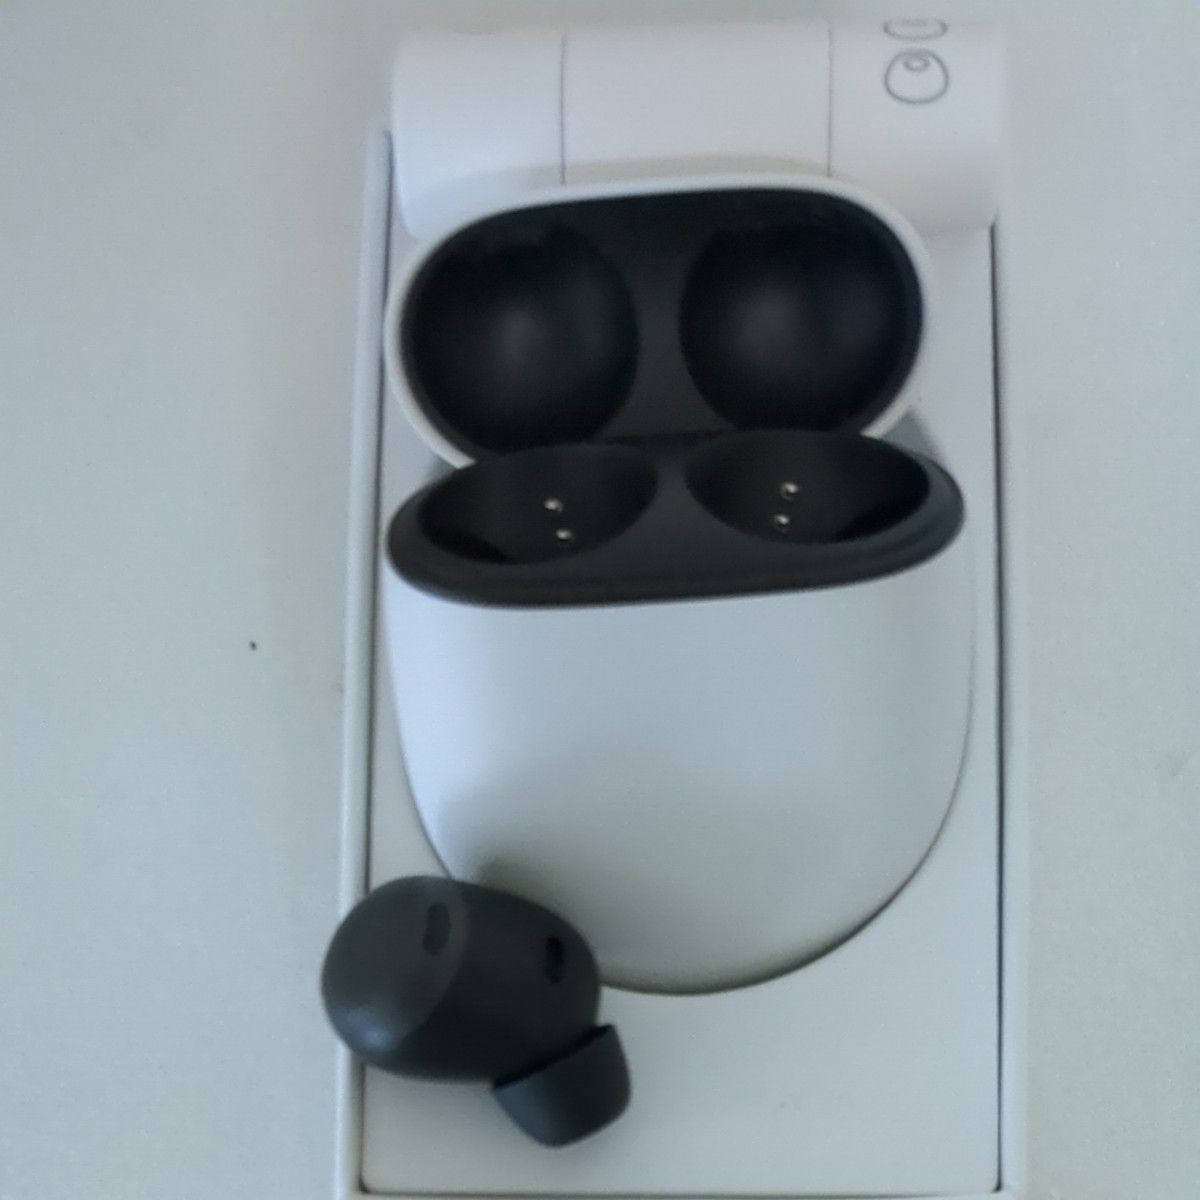 GoogleＰixelＢudsPro 充電器 片耳（左側のみ）イヤホンＰixel6aＢudsPro充電器｜PayPayフリマ